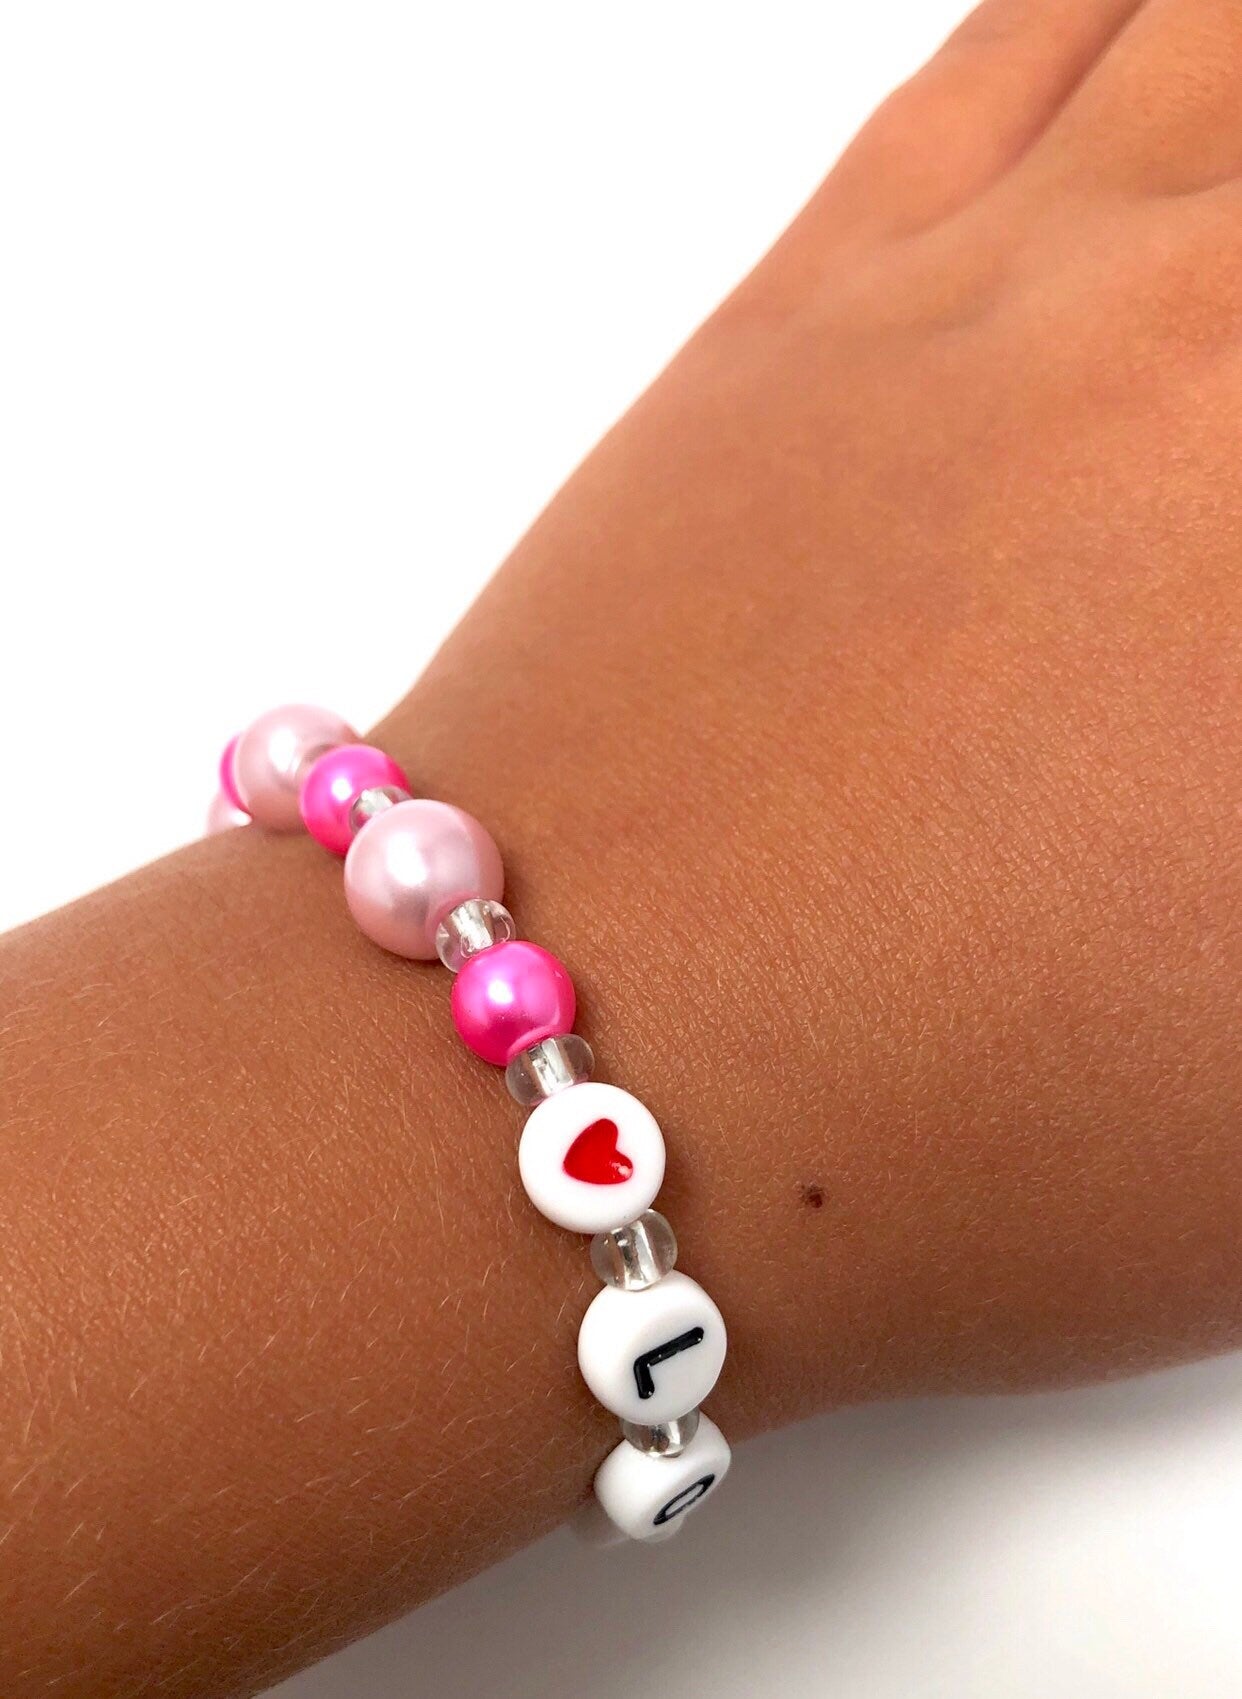 Valentines day gift for girls / Toddler valentines day gift / Girls heart bracelet